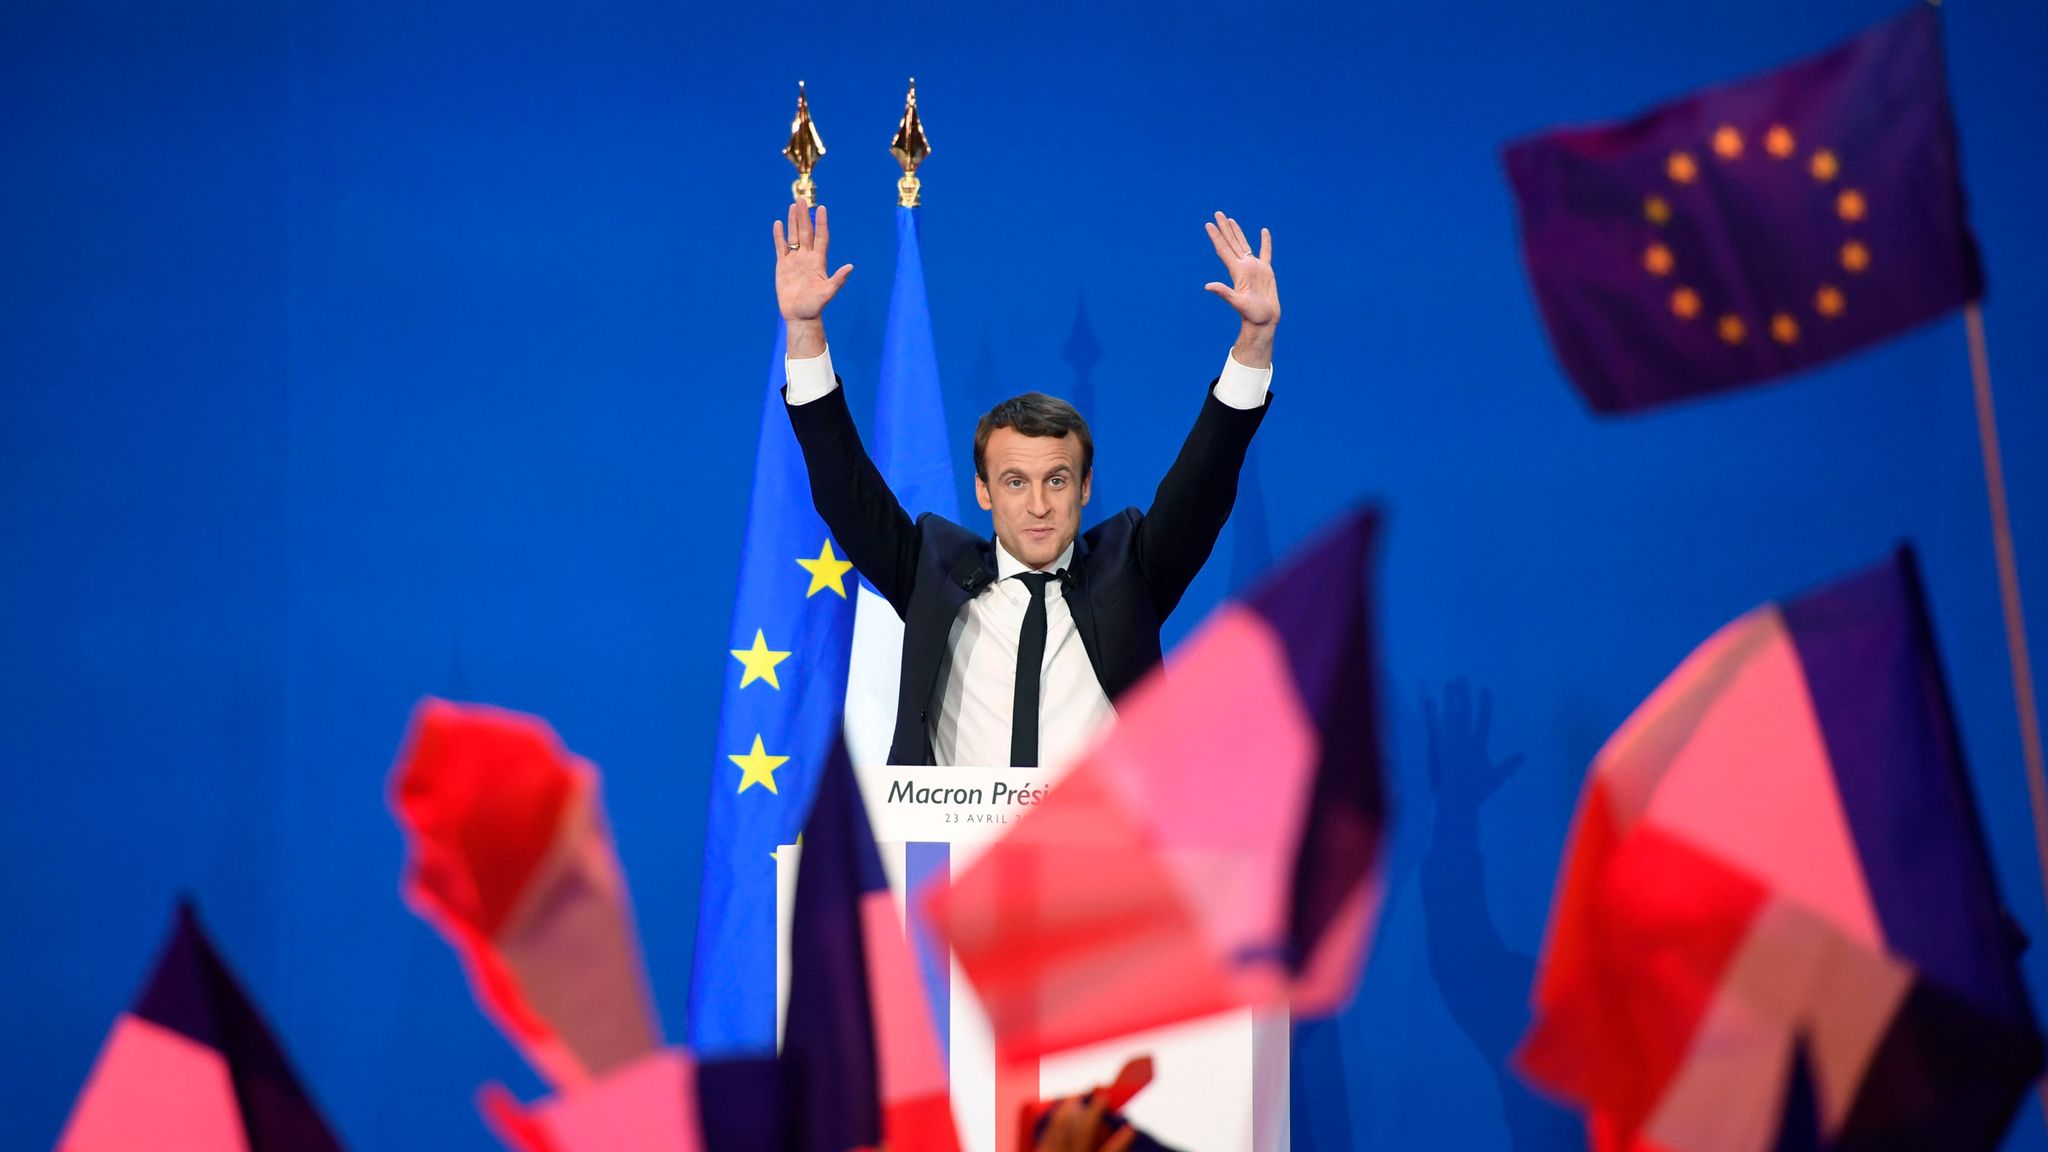 Victorious Macron vows to unite France